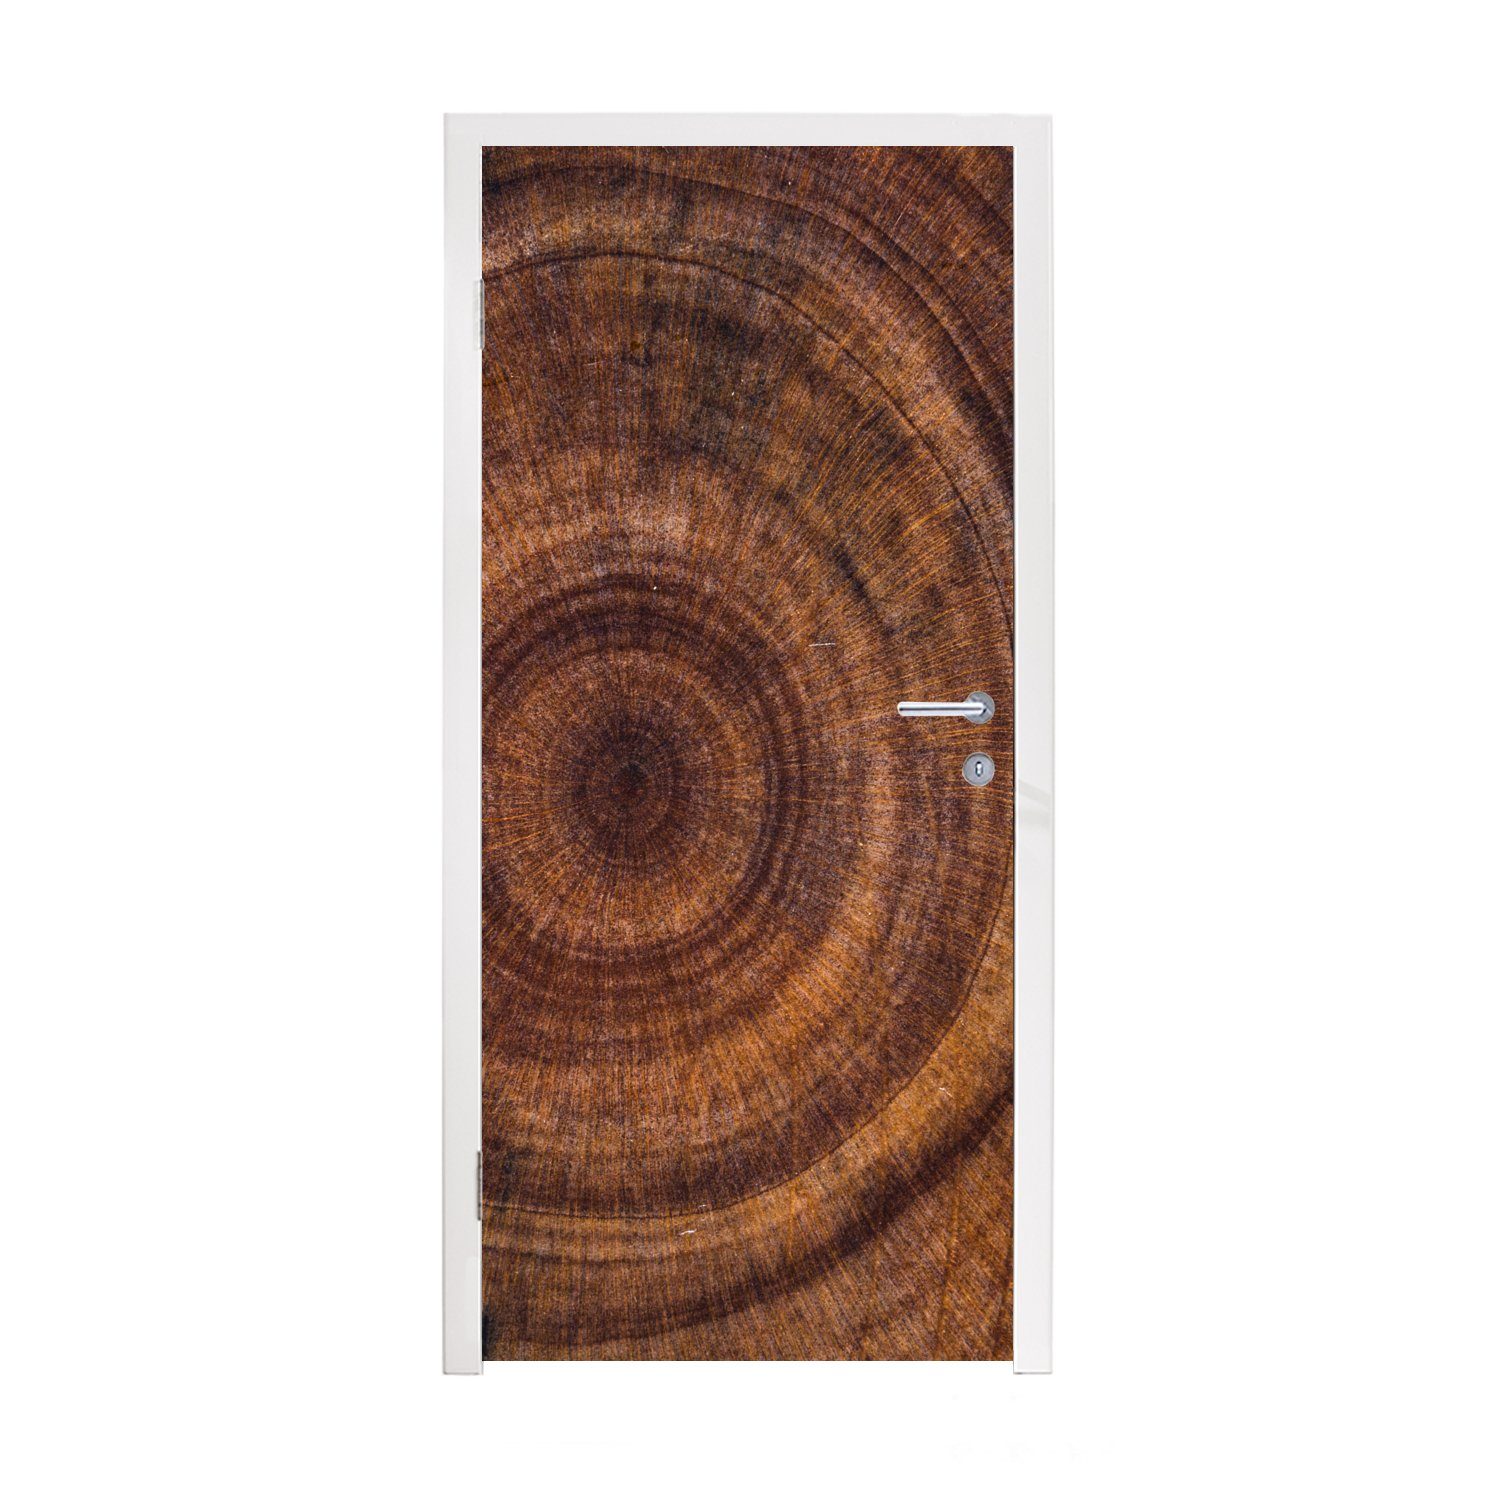 MuchoWow Türtapete Kreis - Holz - Ringe, Matt, bedruckt, (1 St), Fototapete für Tür, Türaufkleber, 75x205 cm